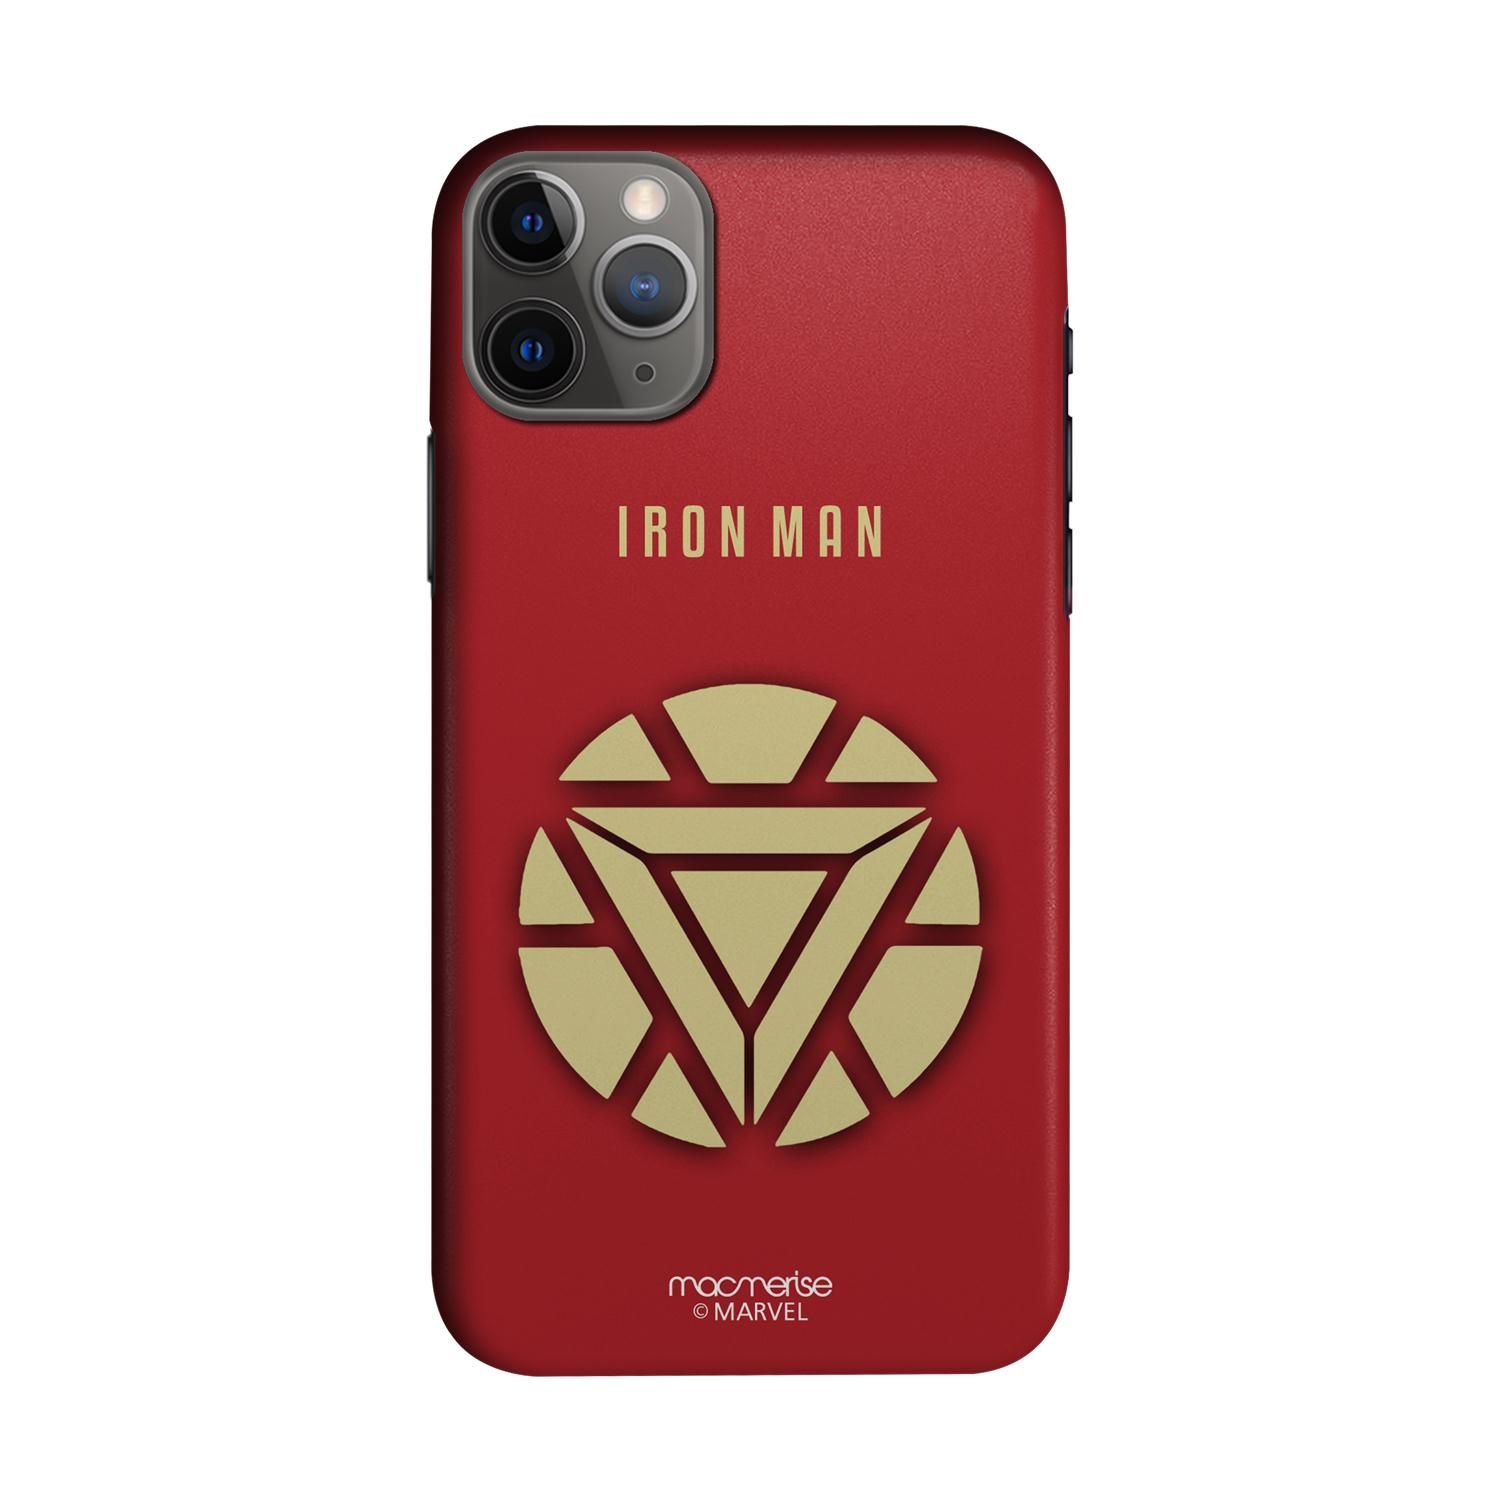 Buy Minimalistic Ironman - Sleek Phone Case for iPhone 11 Pro Max Online